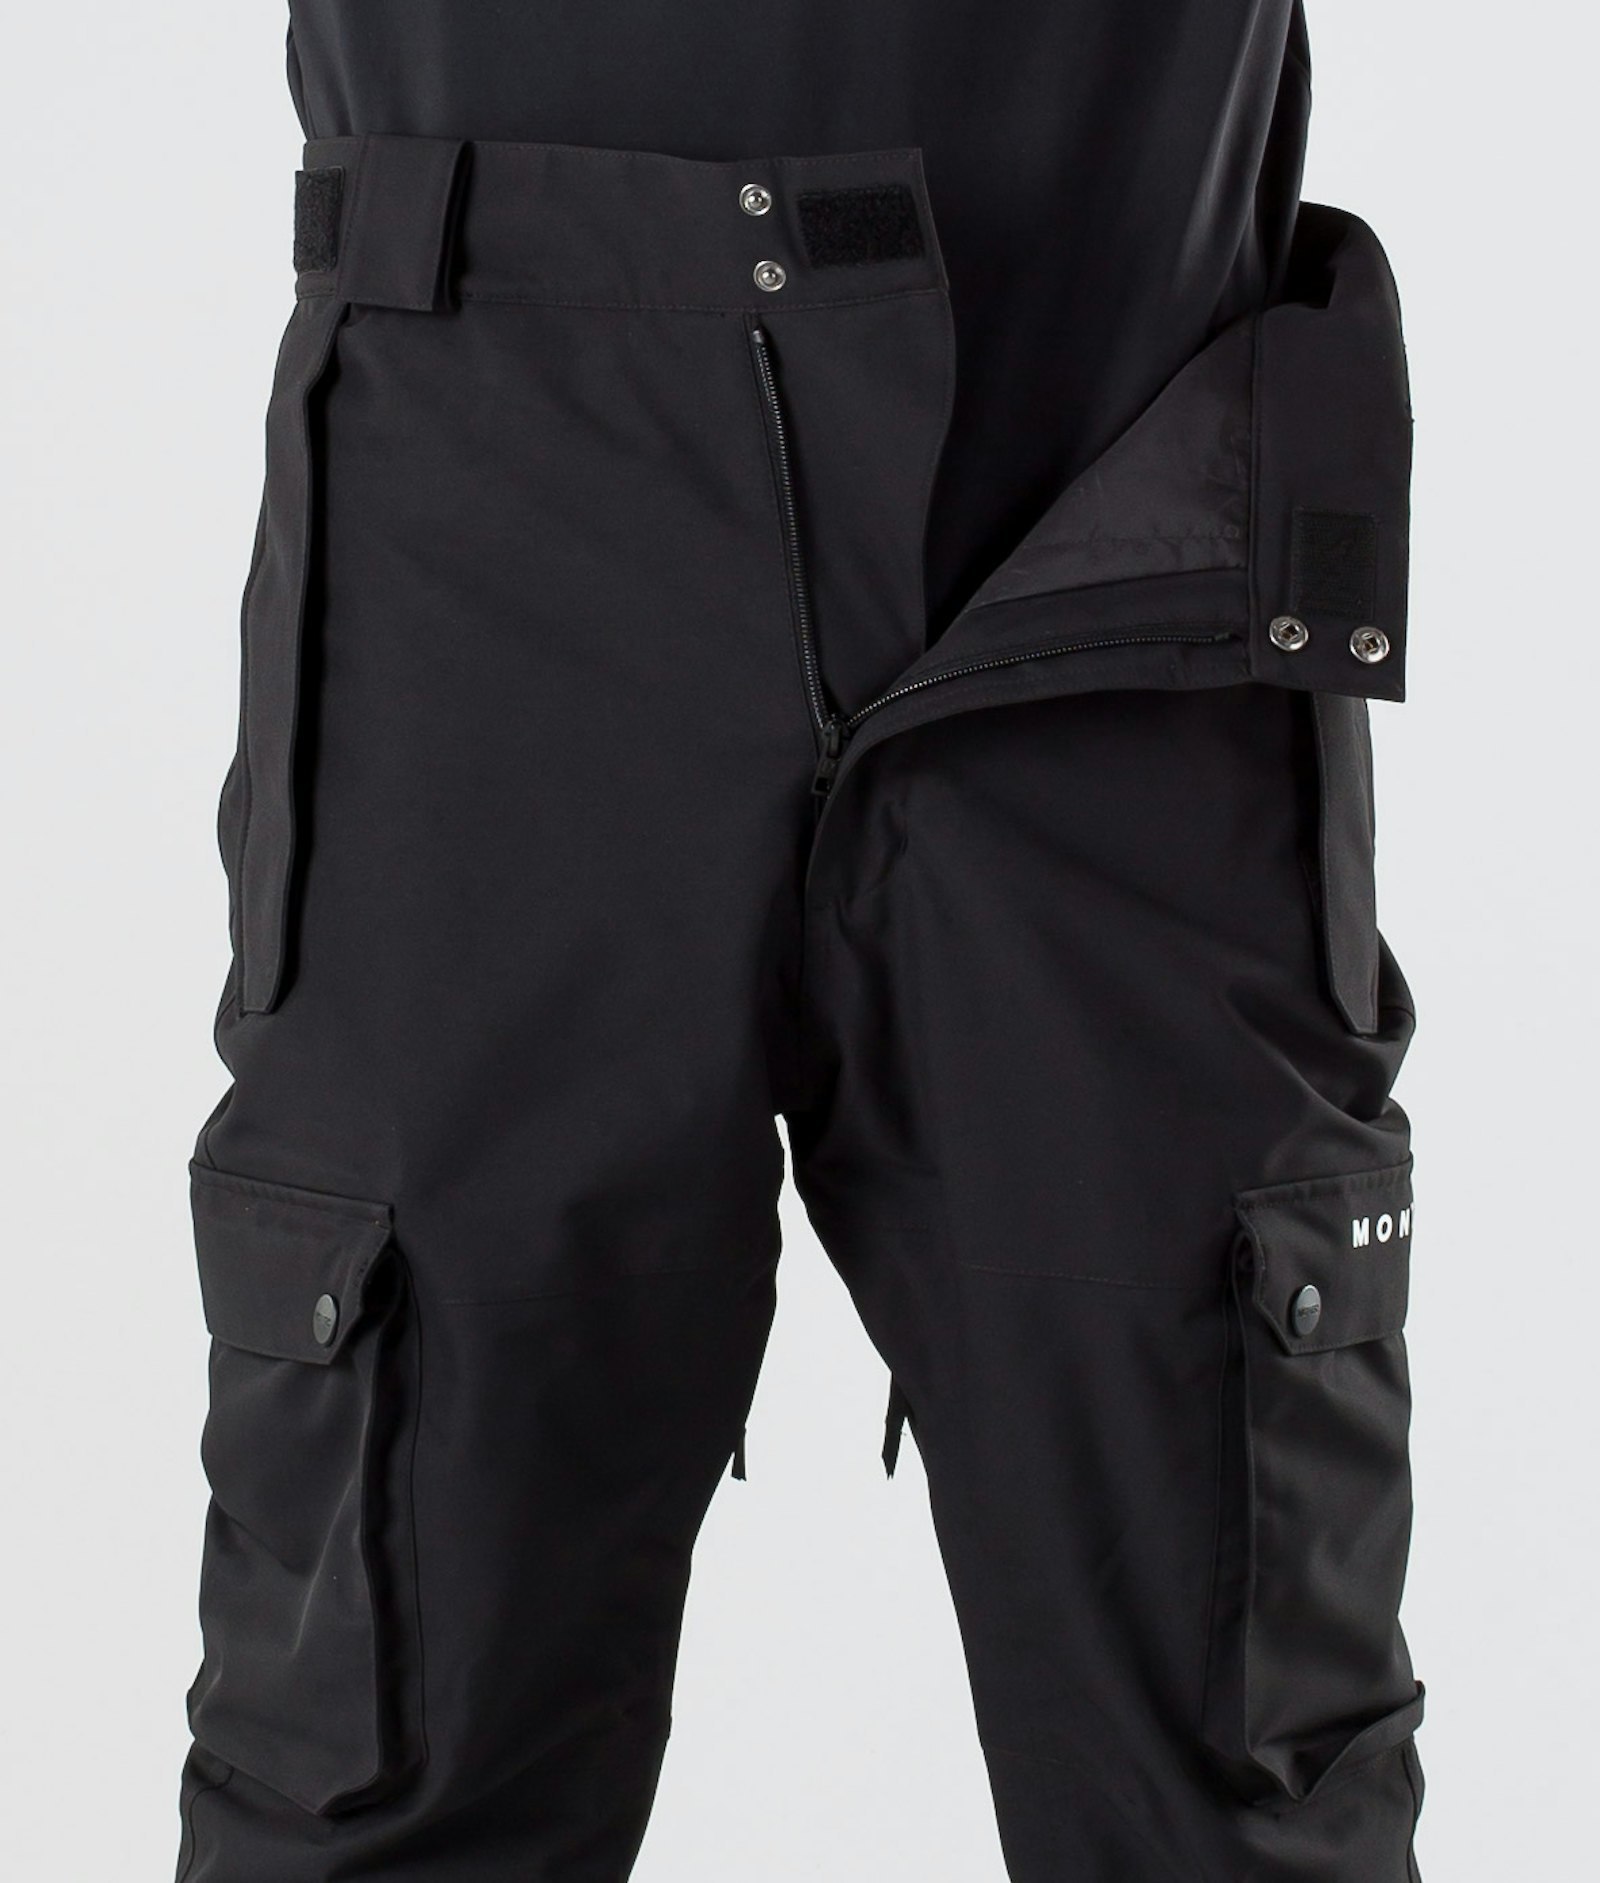 Montec Doom 2019 Kalhoty na Snowboard Pánské Black